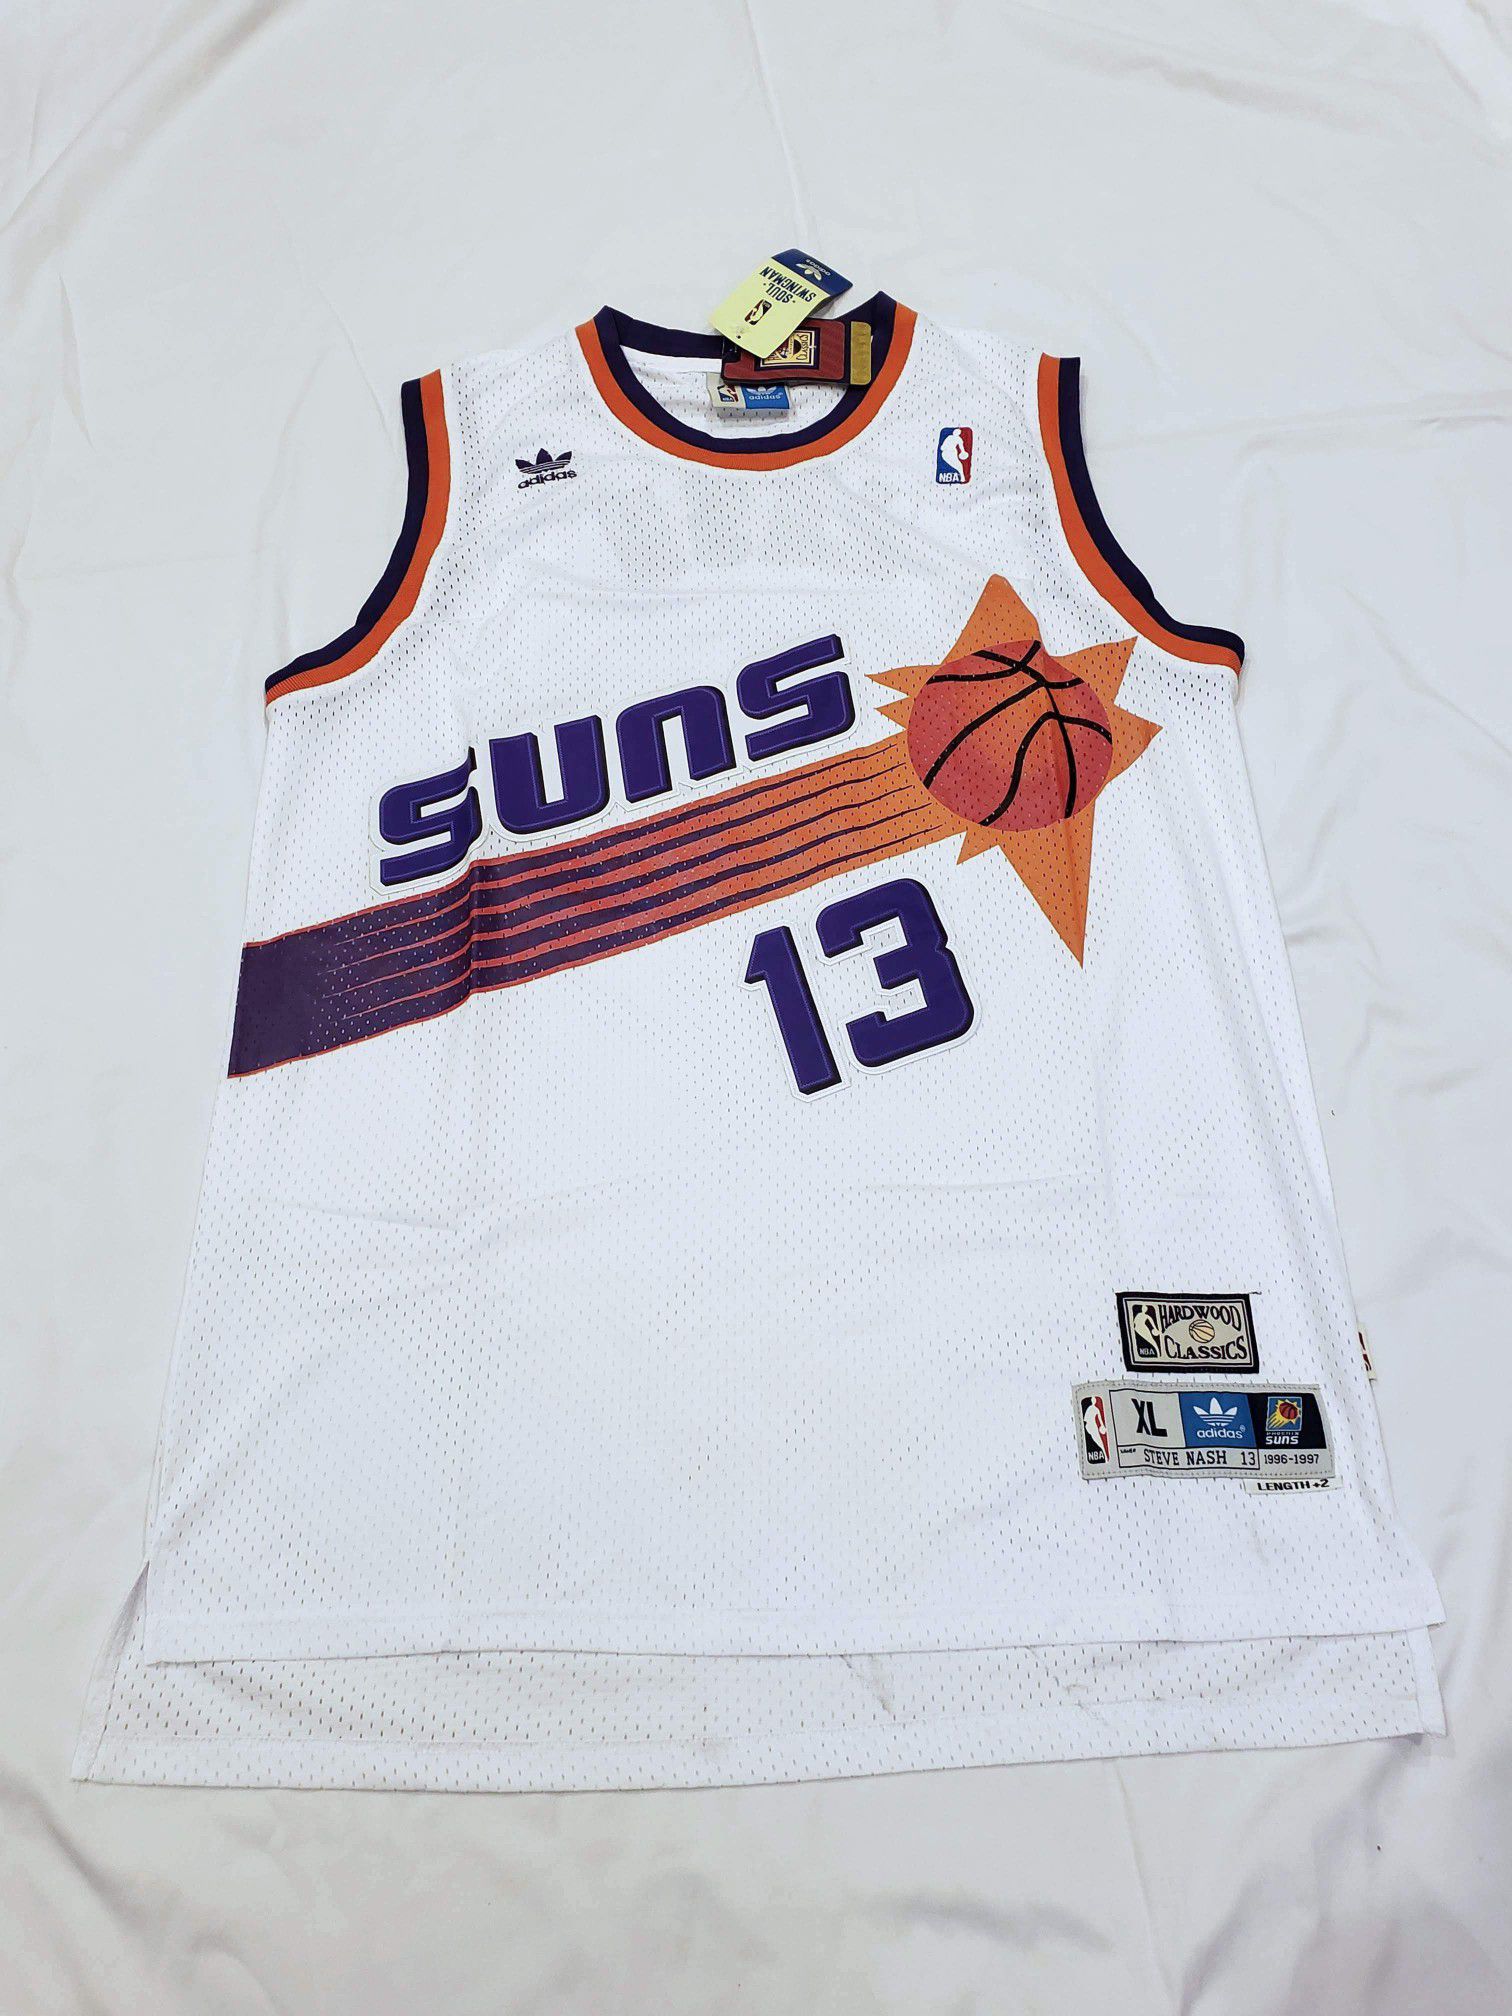 adidas, Shirts, Throwback Phenix Suns Jersey Steve Nash